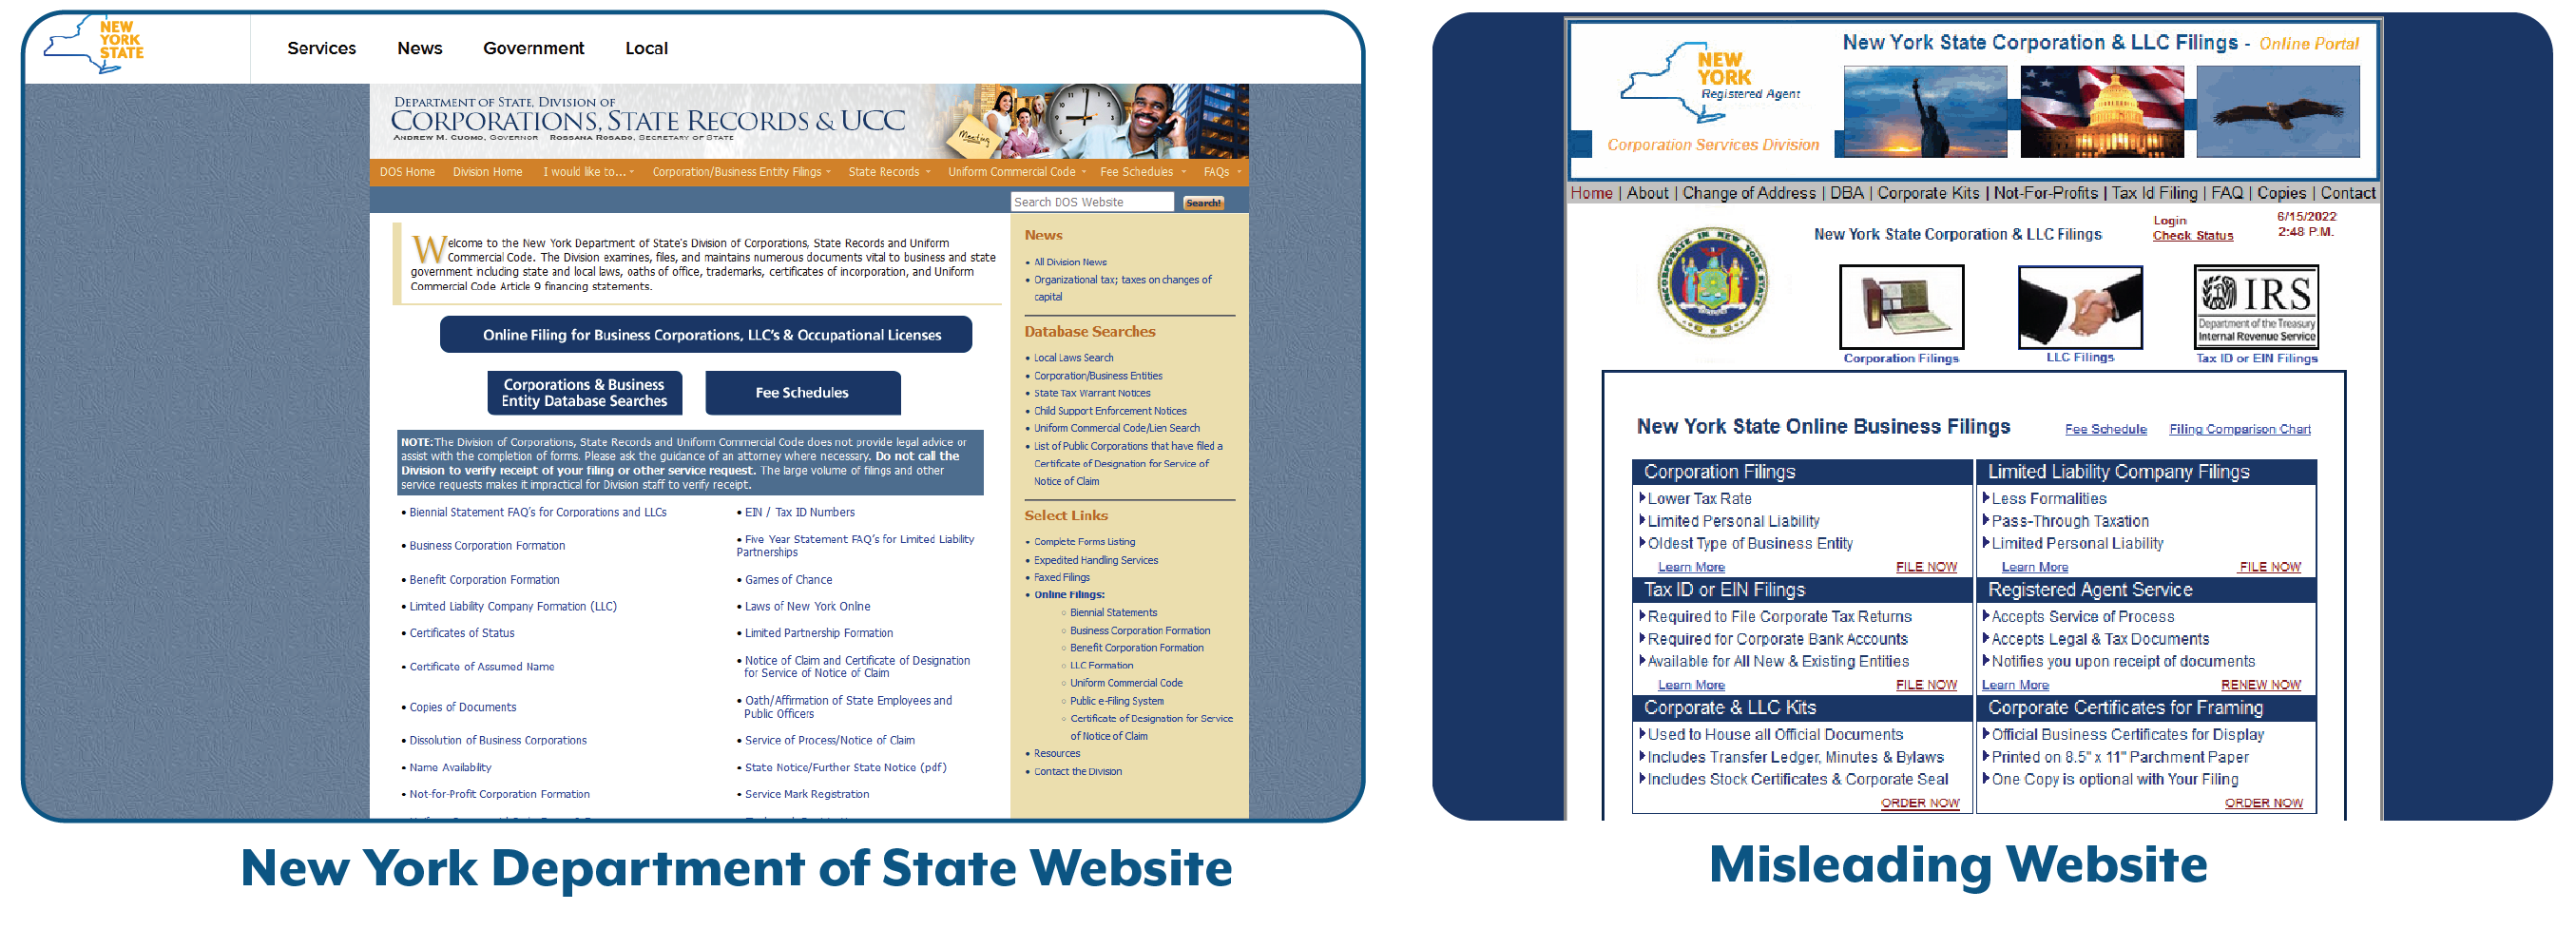 screenshot of state website next to screenshot of misleading website